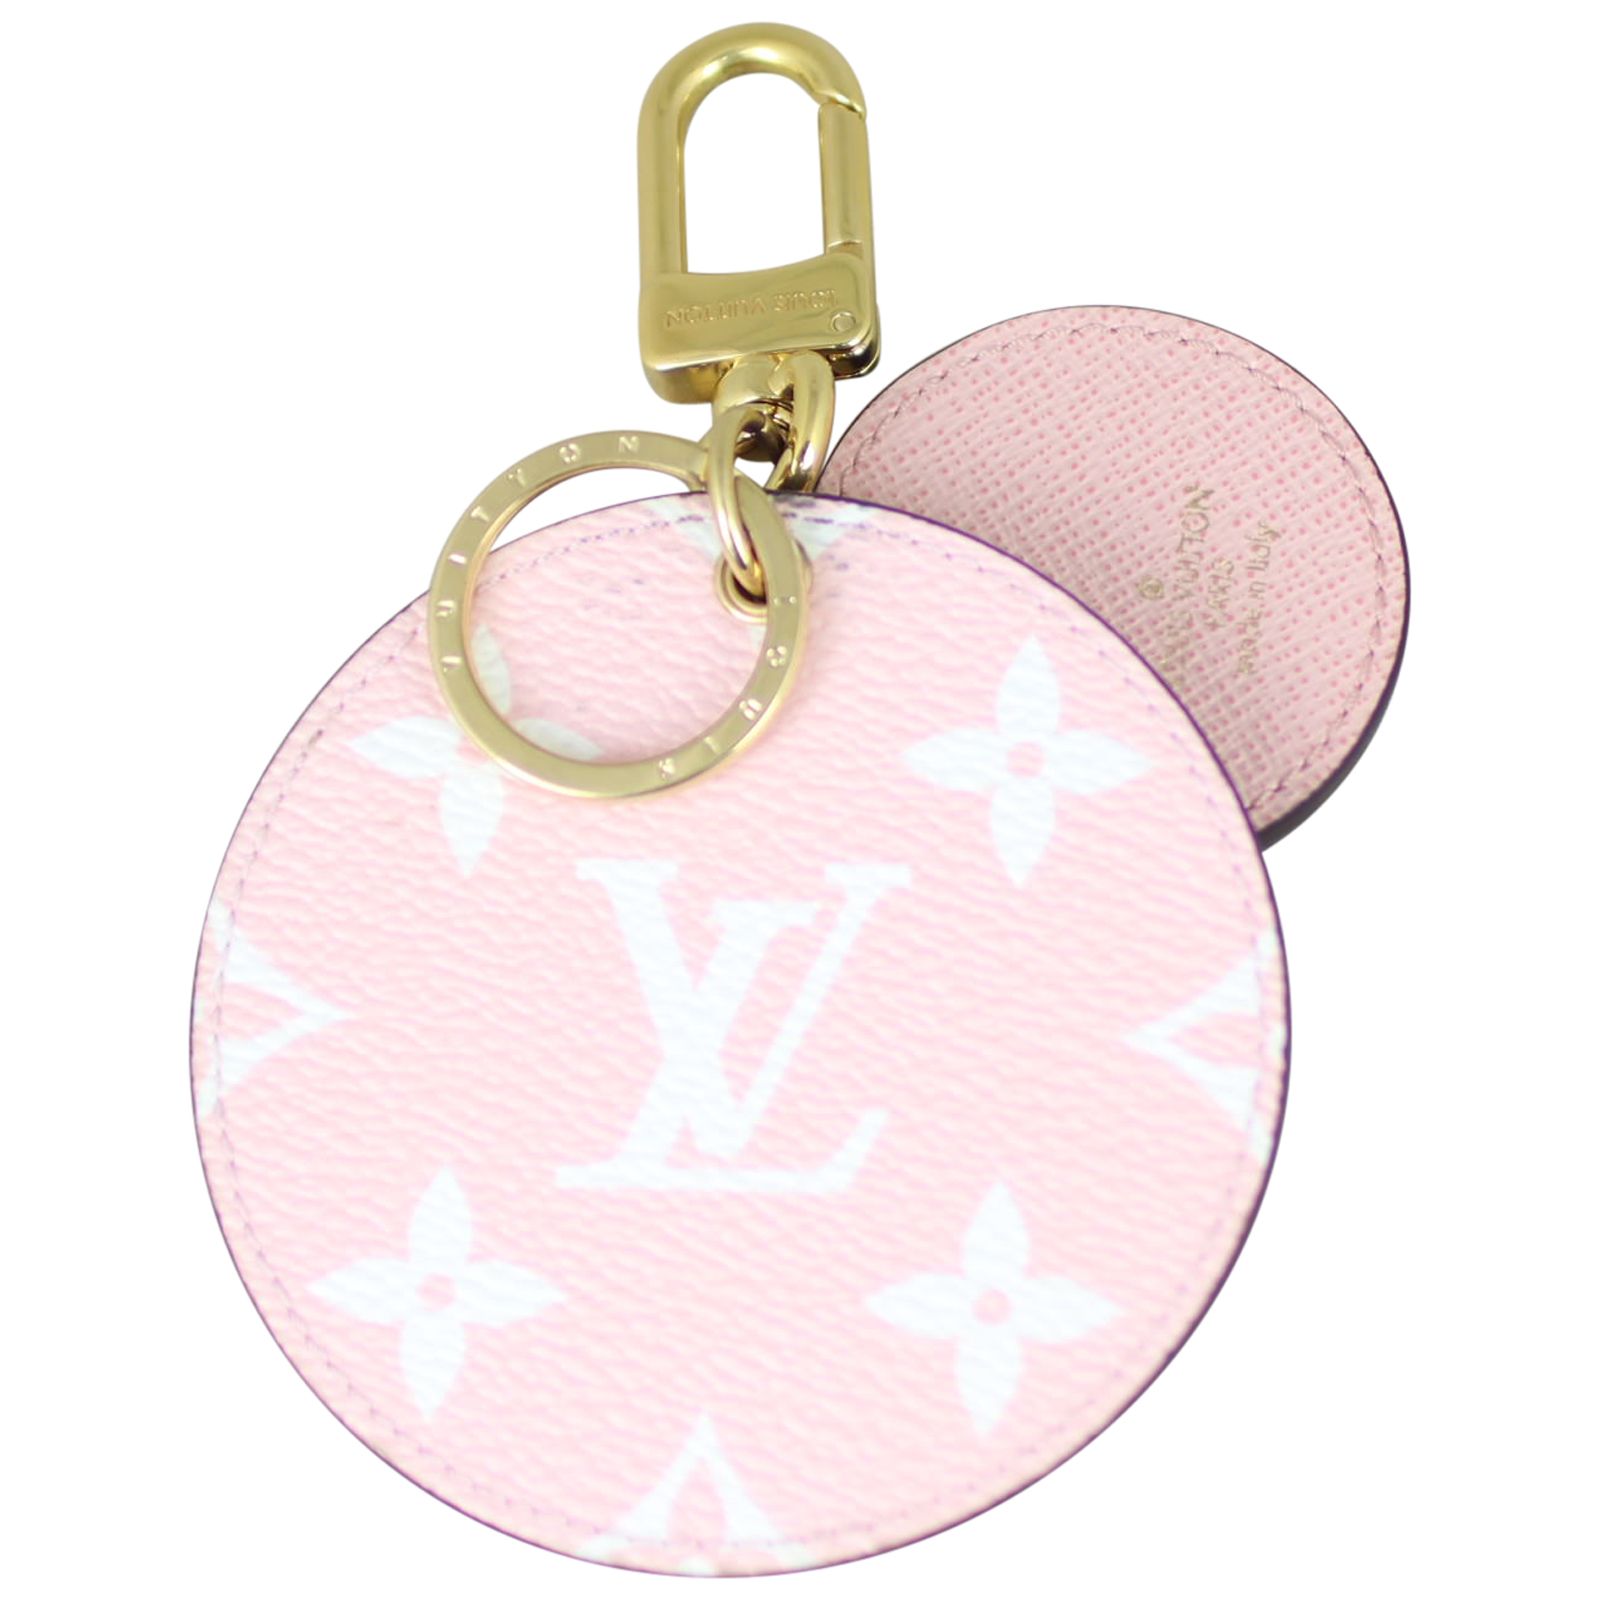 Louis Vuitton Monogram Canvas Round Key Holder and Bag Charm